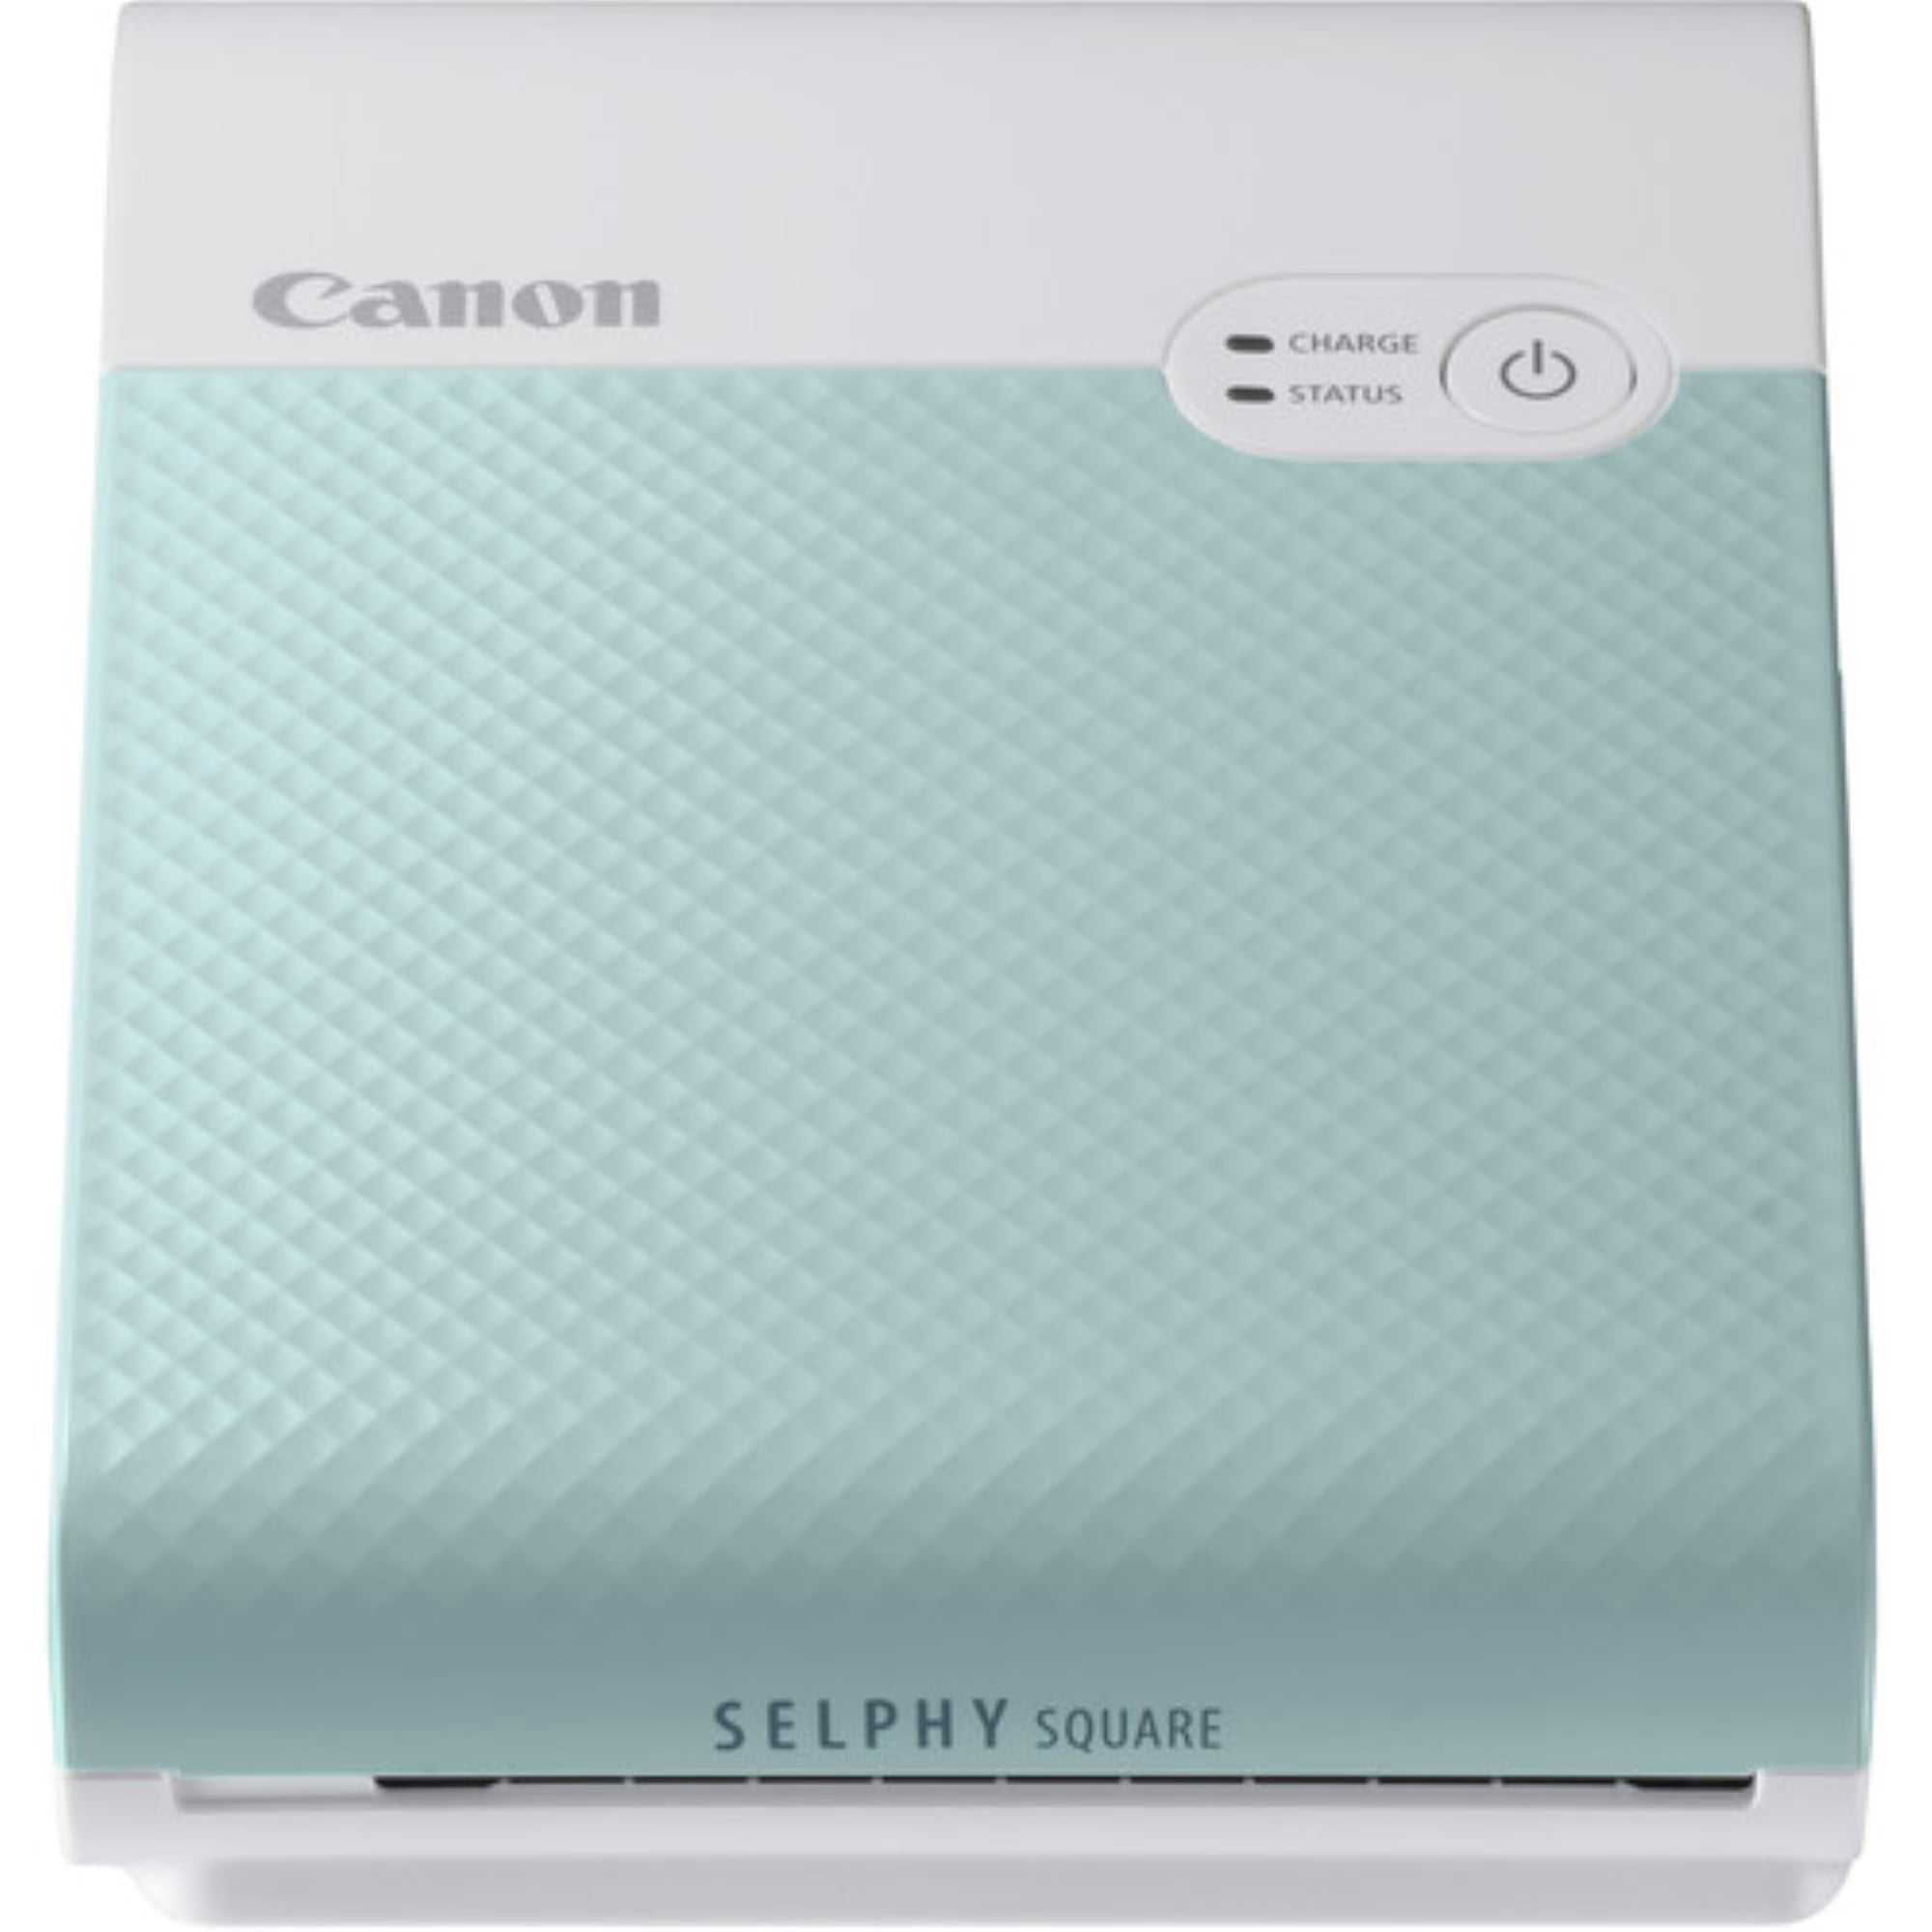 Canon SELPHY Square QX10: A Compact Photo Printer 